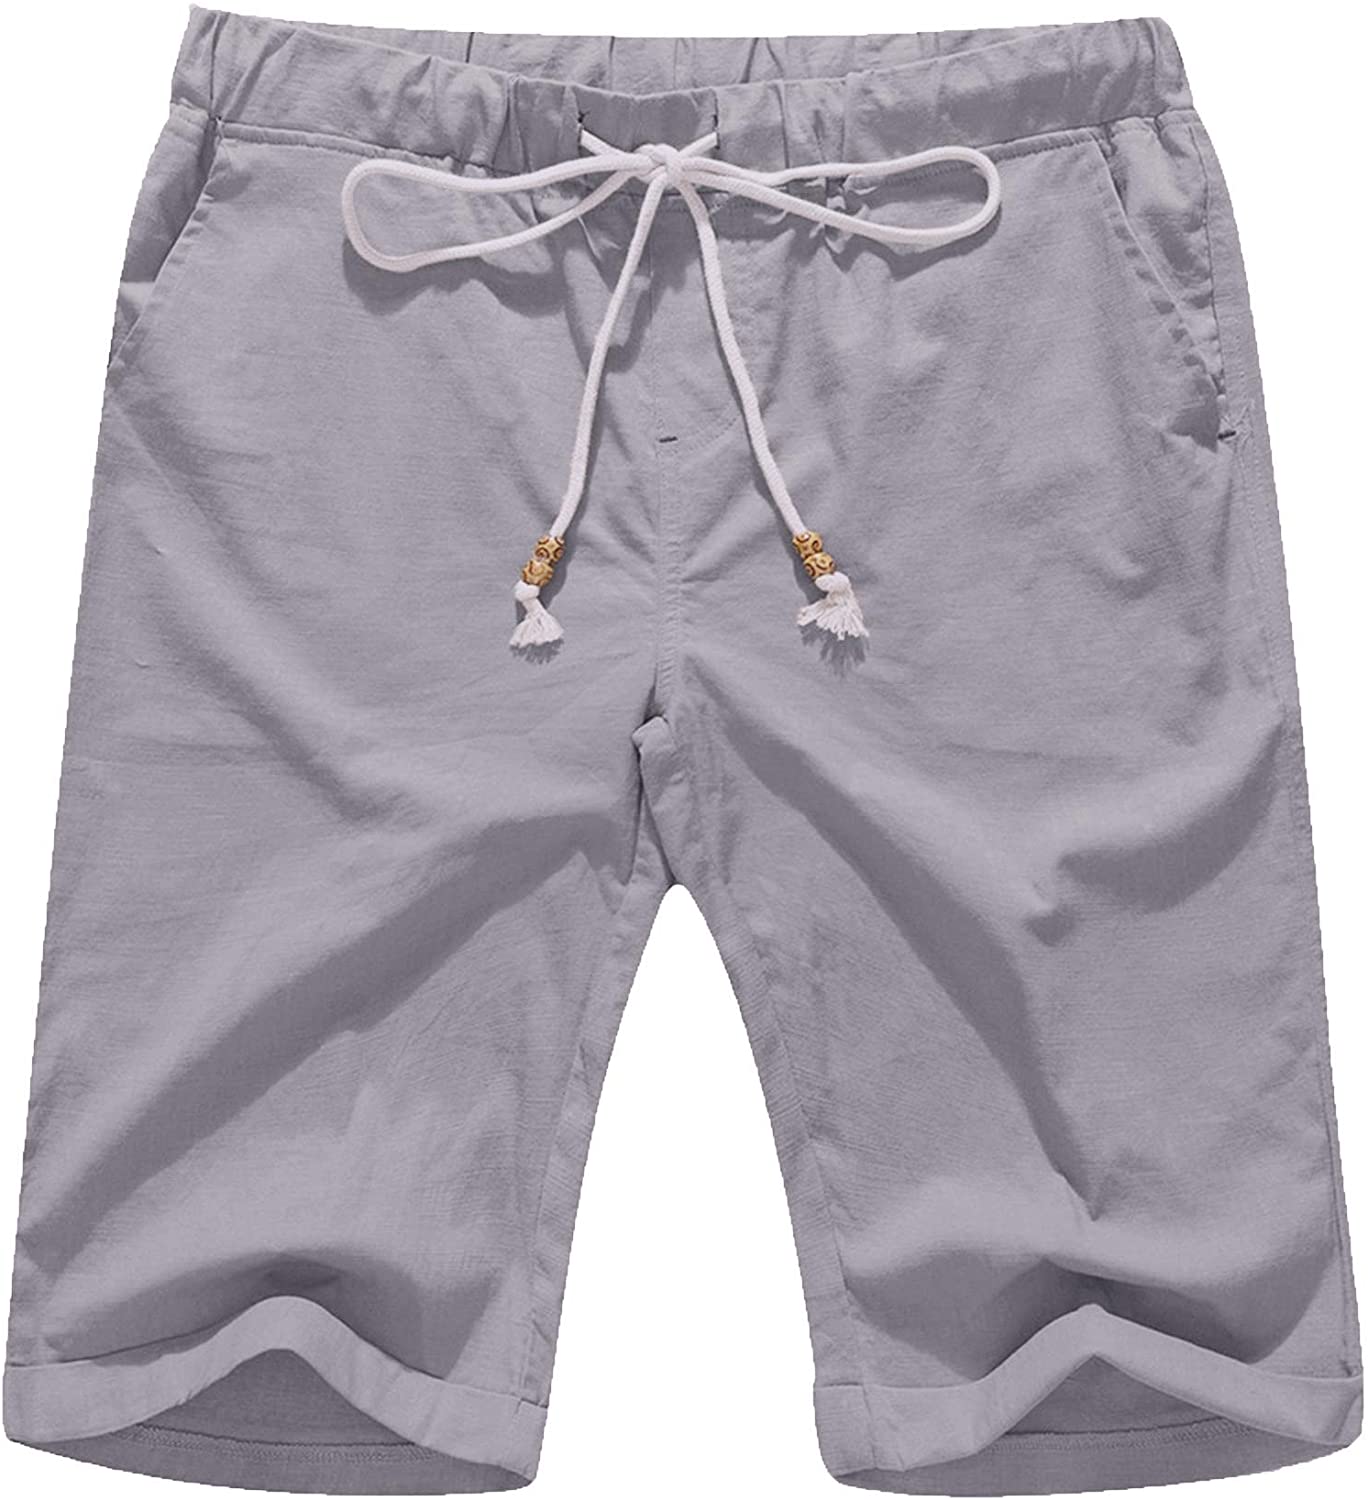 Boisouey Men's Linen Casual Classic Fit Short Summer Beach Shorts